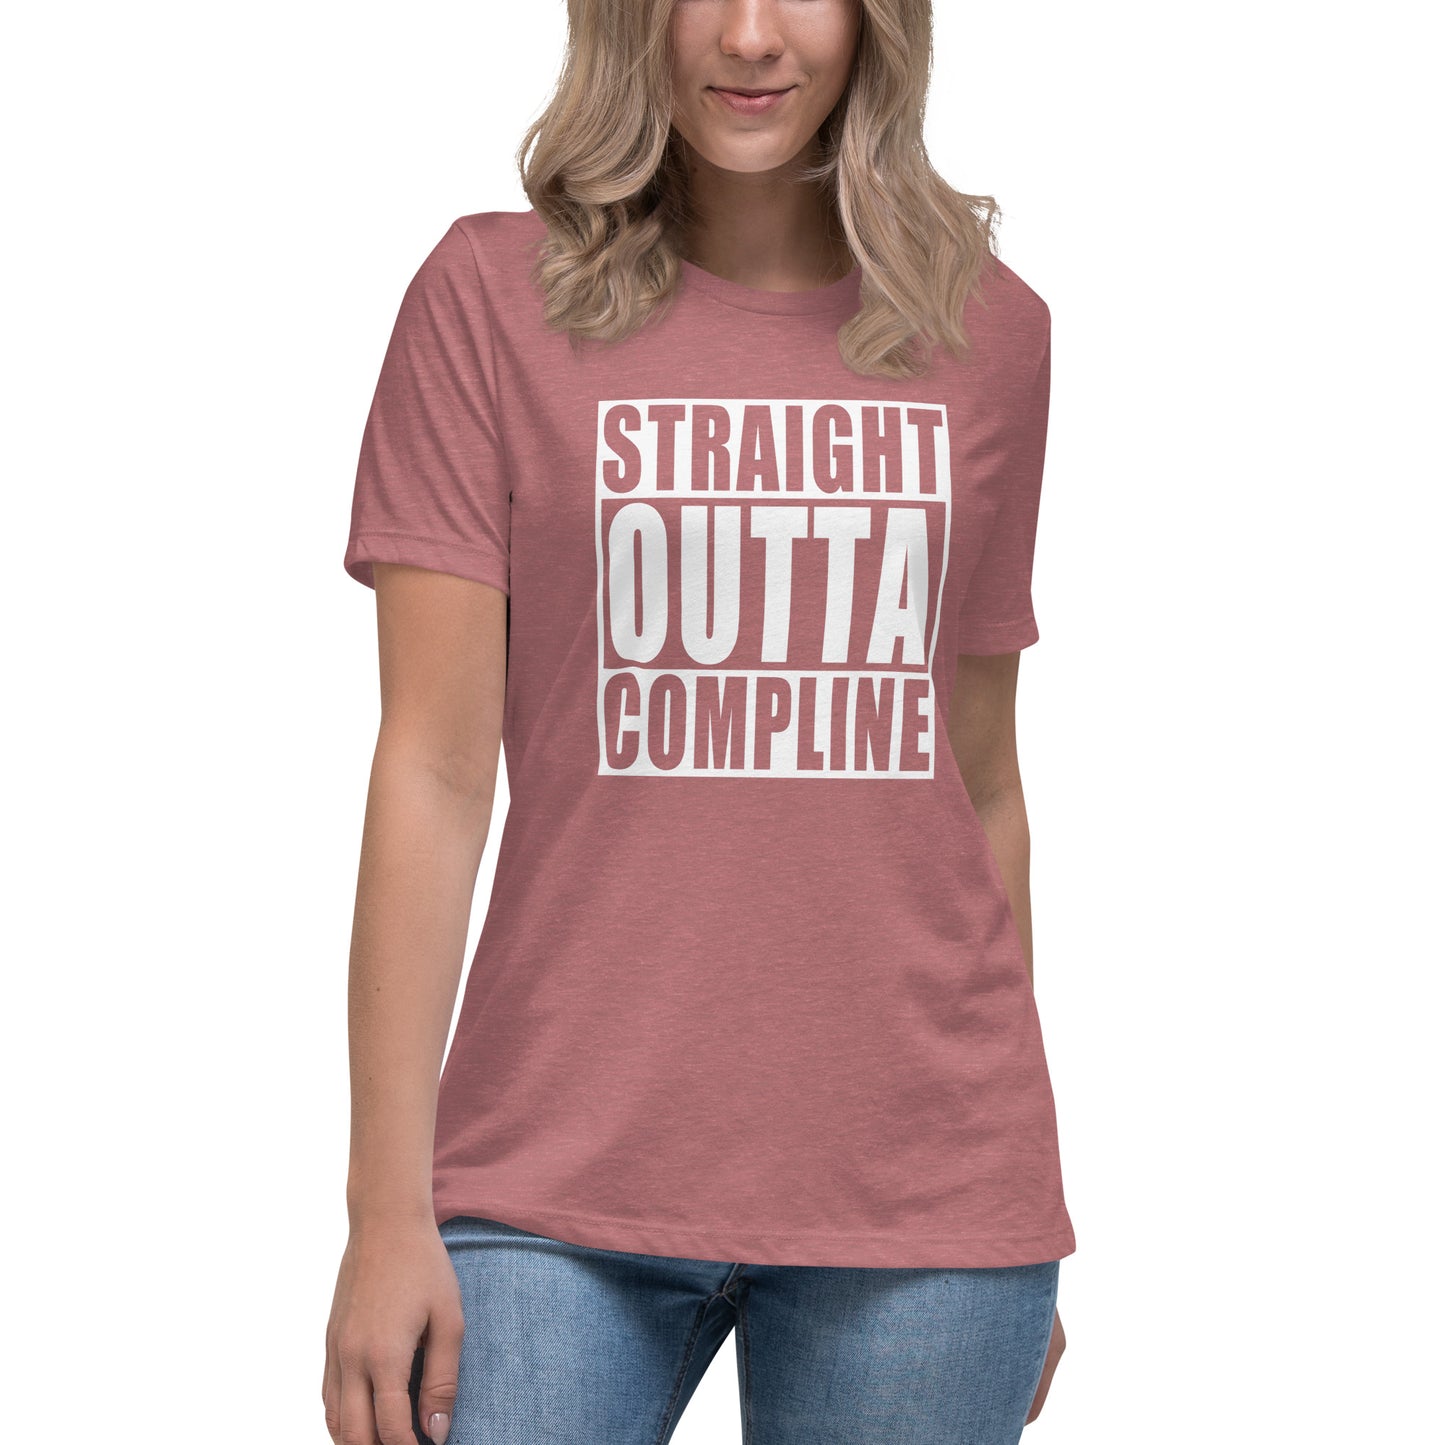 Straight Outta Compline - Women's Relaxed T-Shirt